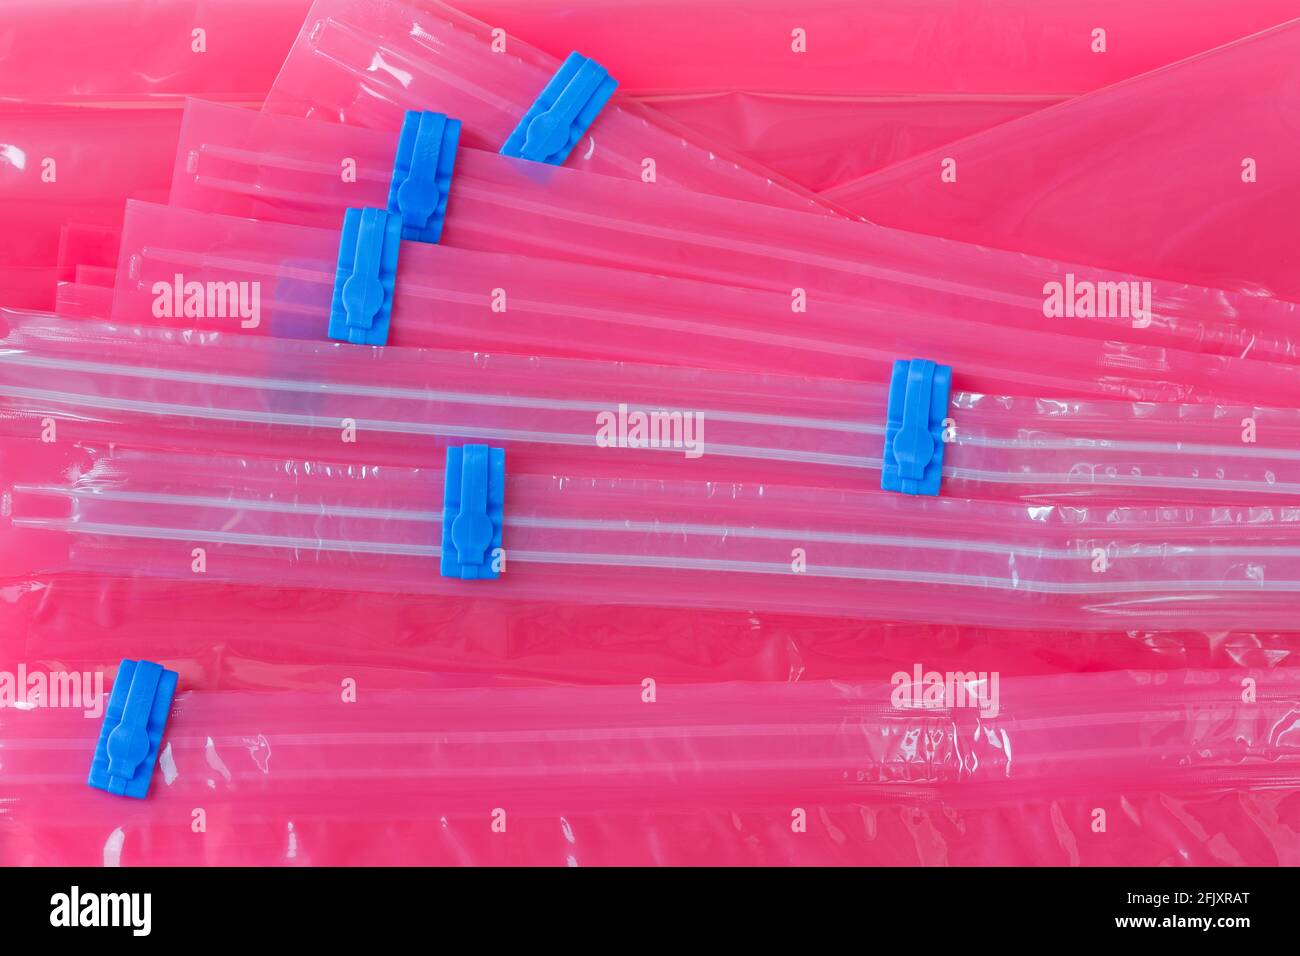 https://c8.alamy.com/comp/2FJXRAT/closeup-pink-plastic-zip-lock-bag-with-blue-sealing-to-pack-store-cloths-and-resealable-2FJXRAT.jpg